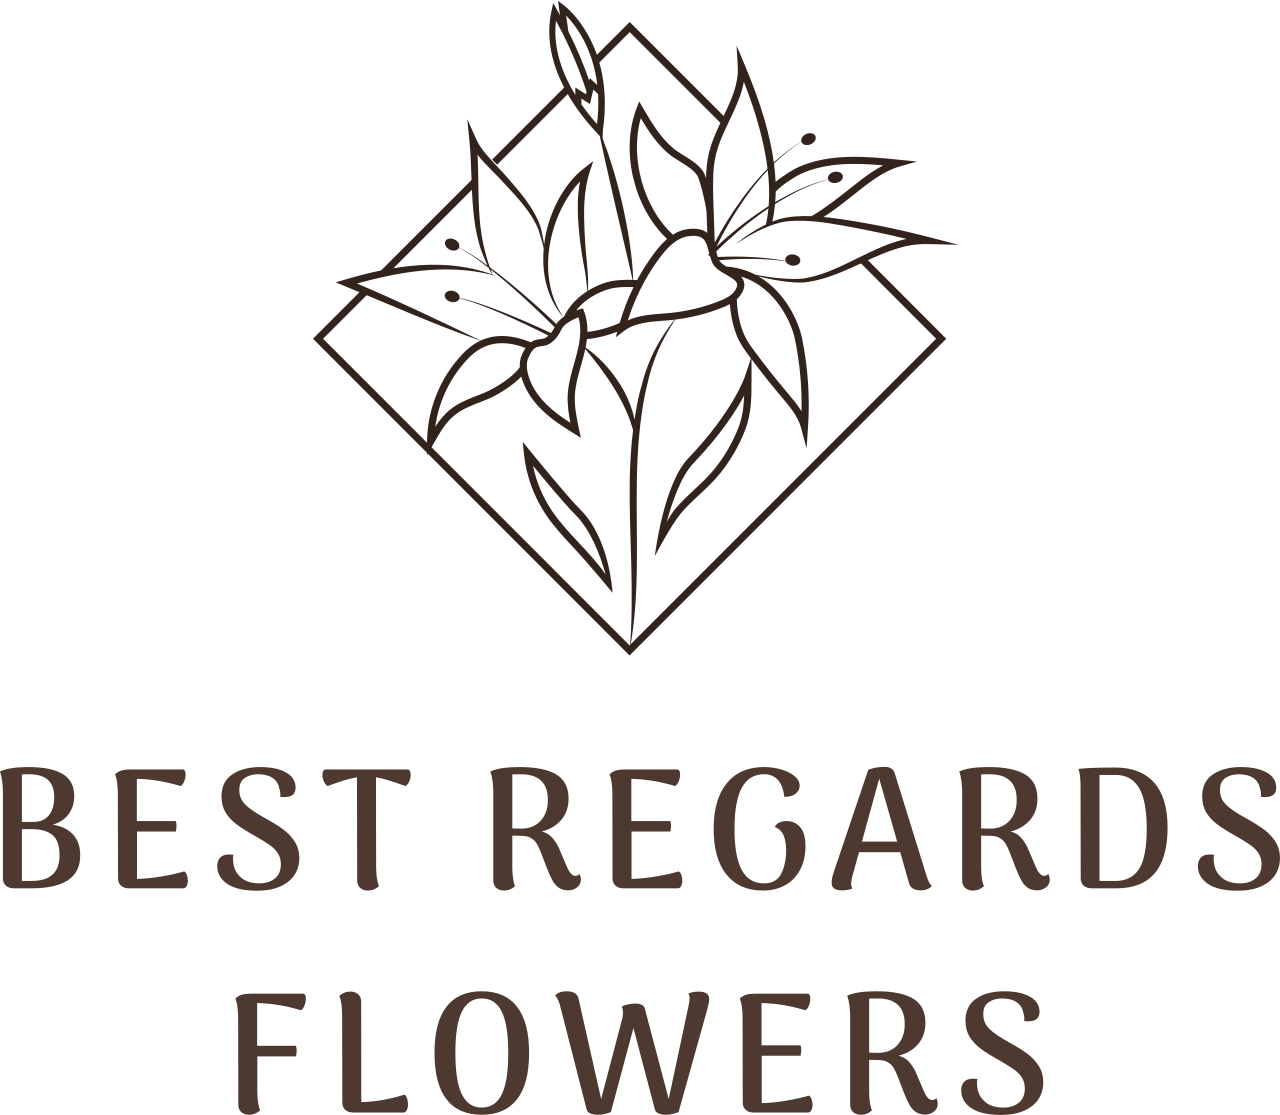 Best Regards
Flowers's logo